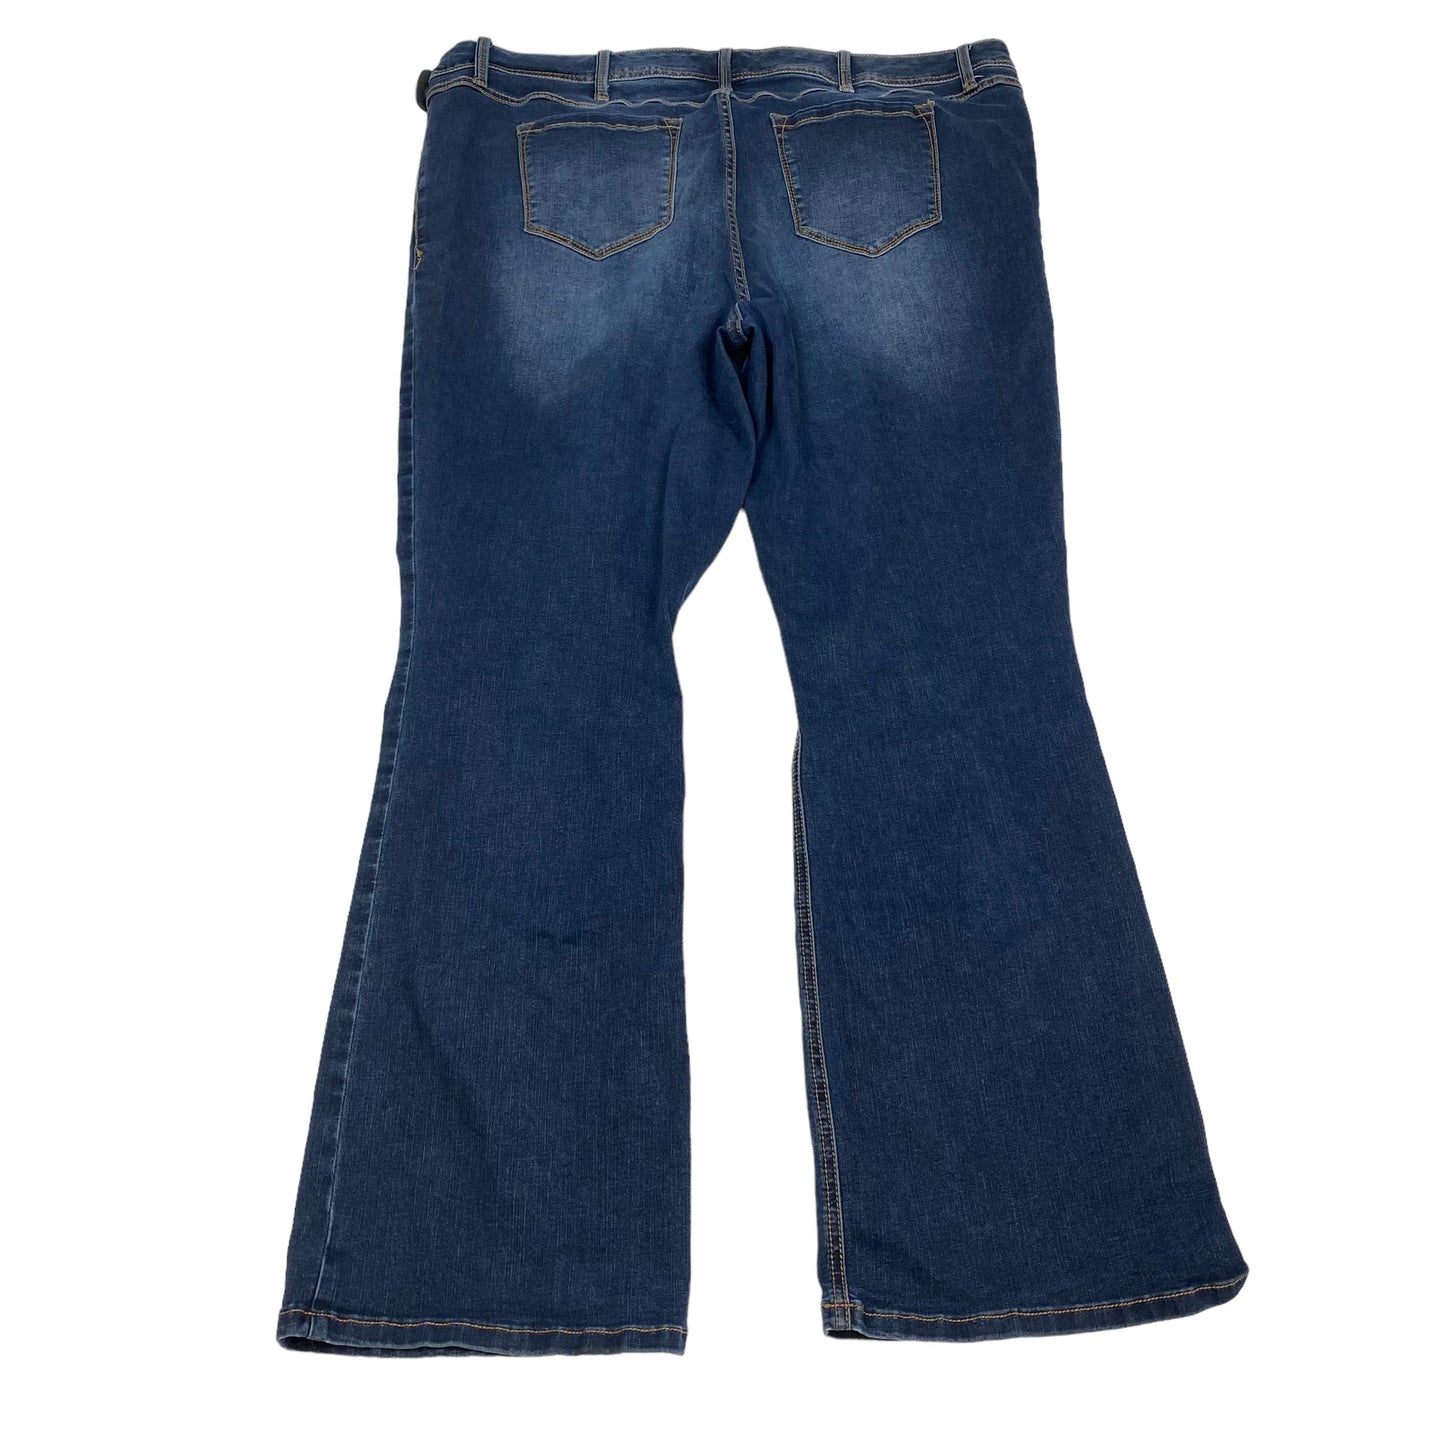 Blue Denim Jeans Boot Cut Torrid, Size 24